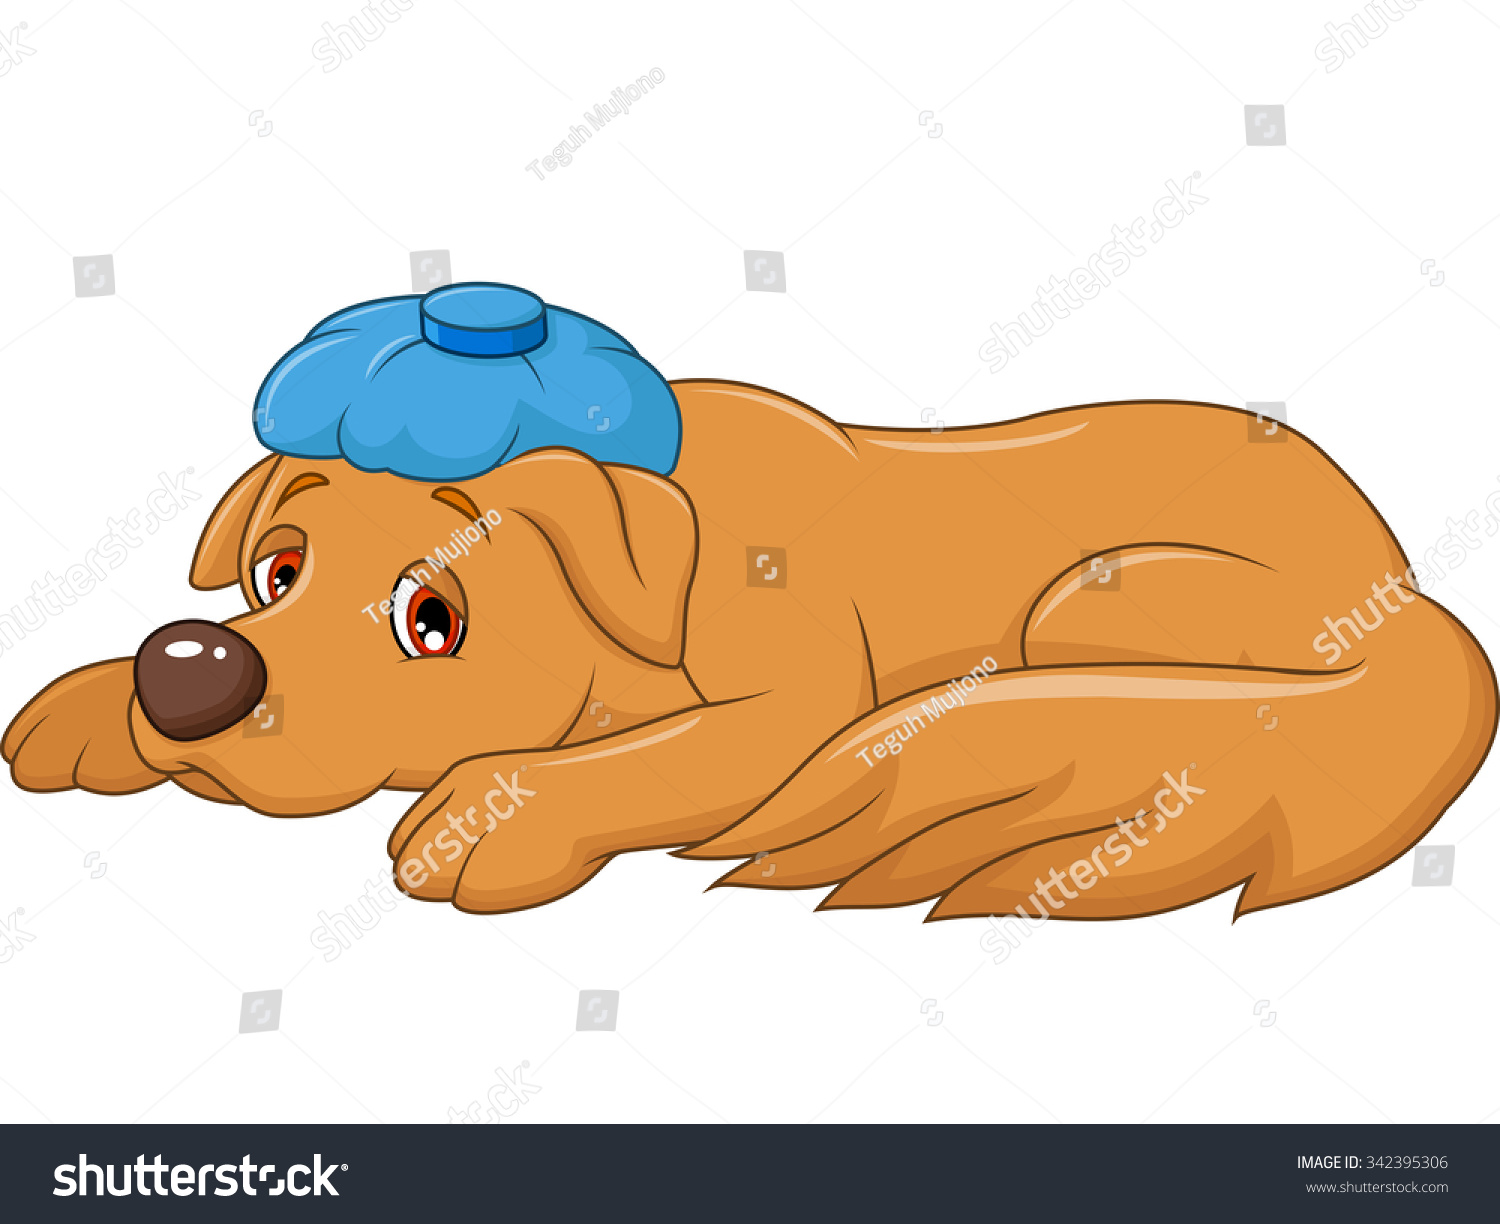 Cartoon Sick Dog With Ice Bag, Isolated On White Background Stock ...